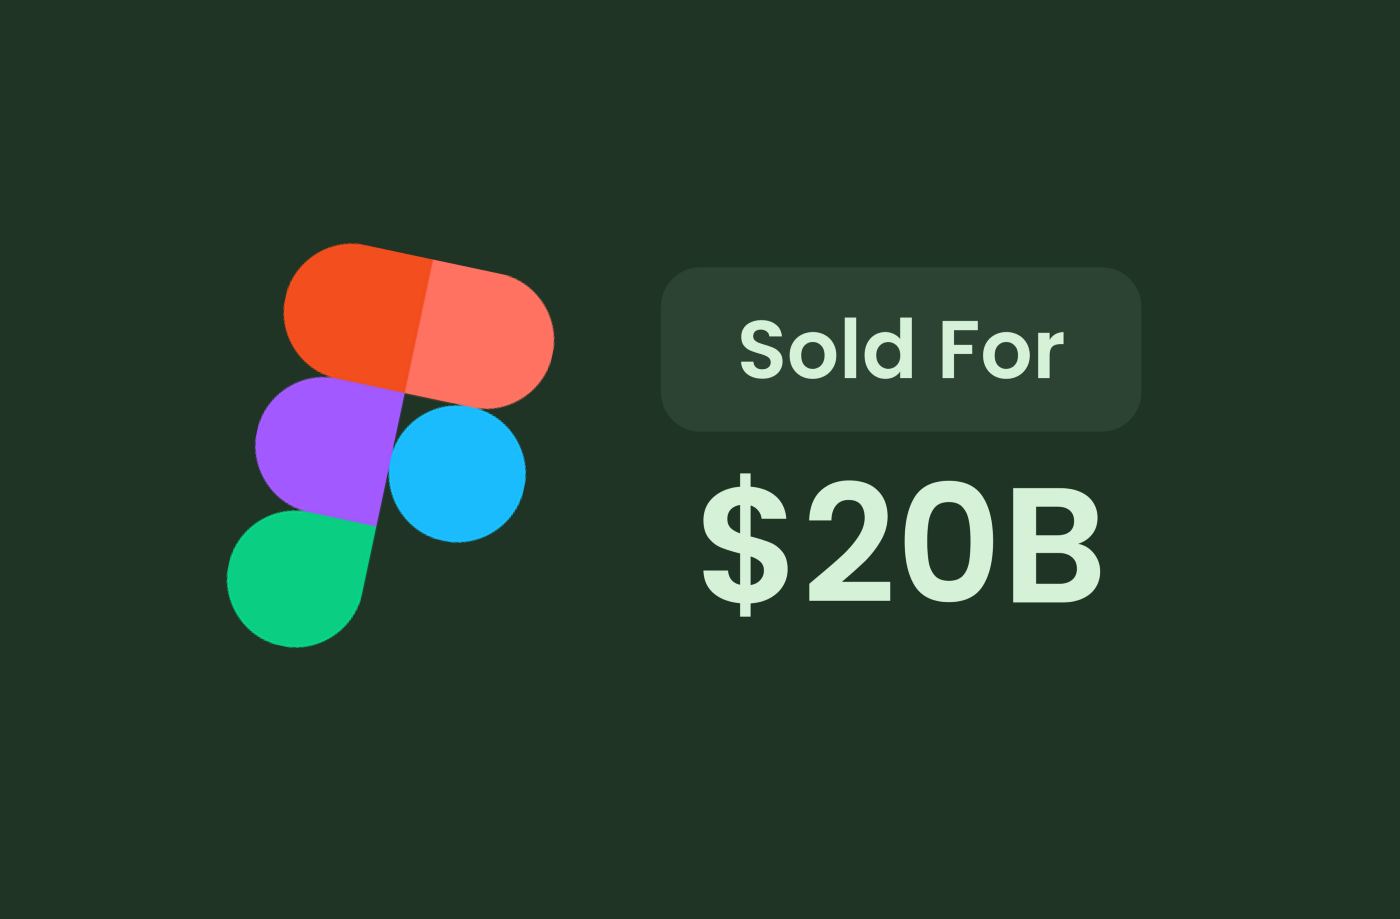 Adobe Inc. (NASDAQ:ADBE) Entered into a Final $20BMerger Deal to Buy Figma